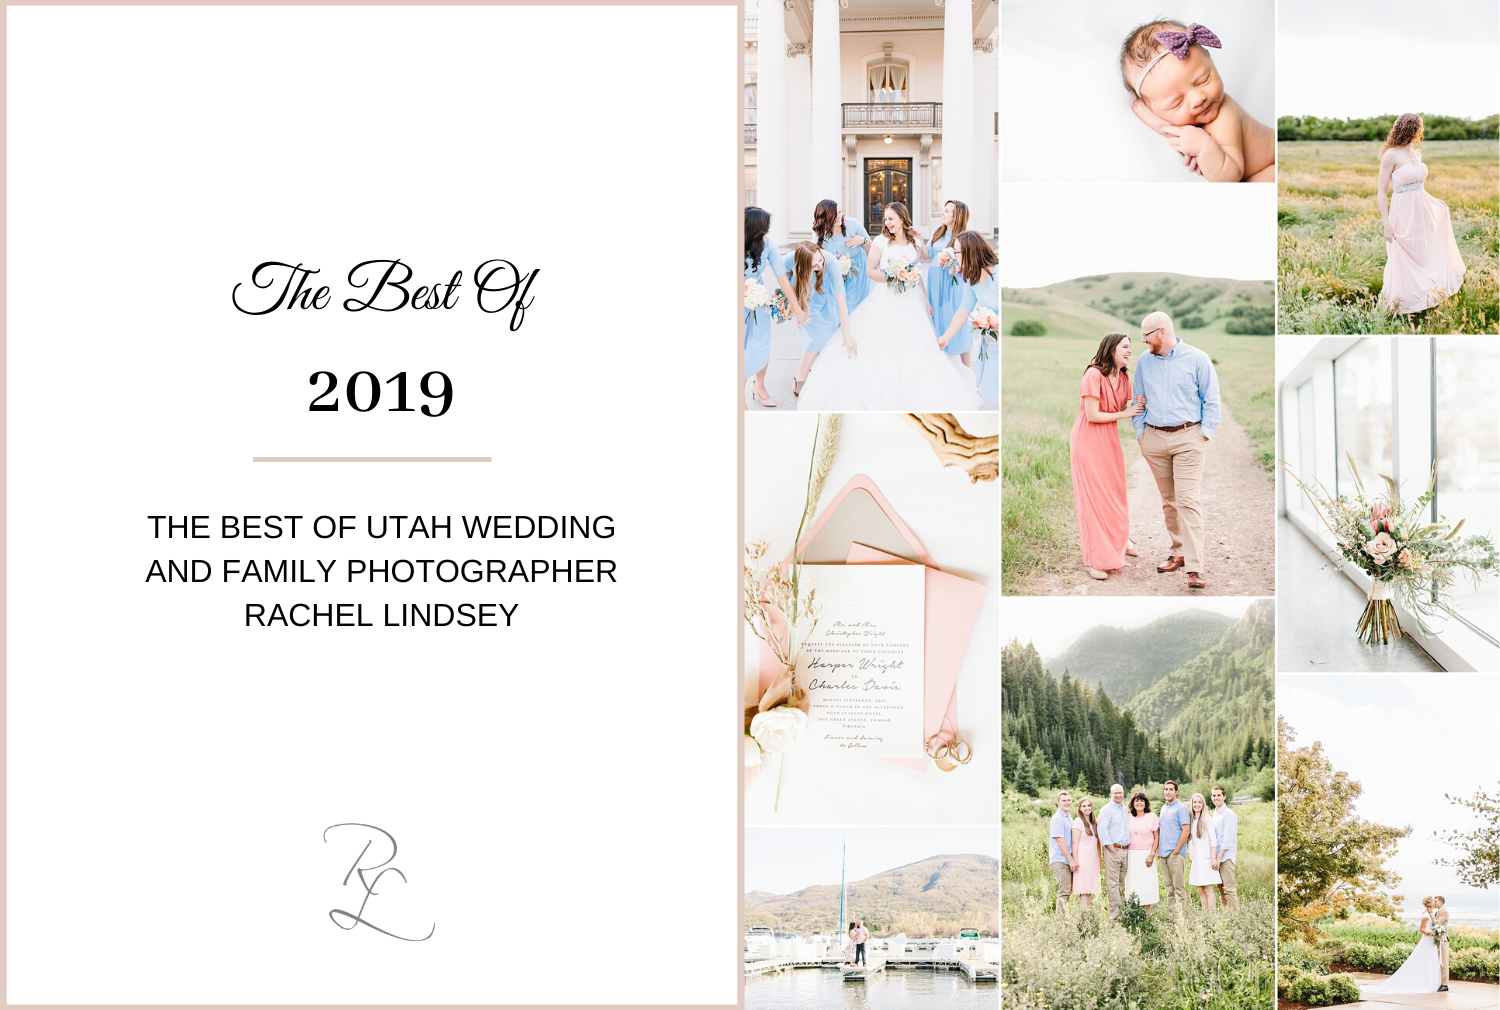 The best of 2019 Utah Wedding and Family Photographer Rachel Lindsey